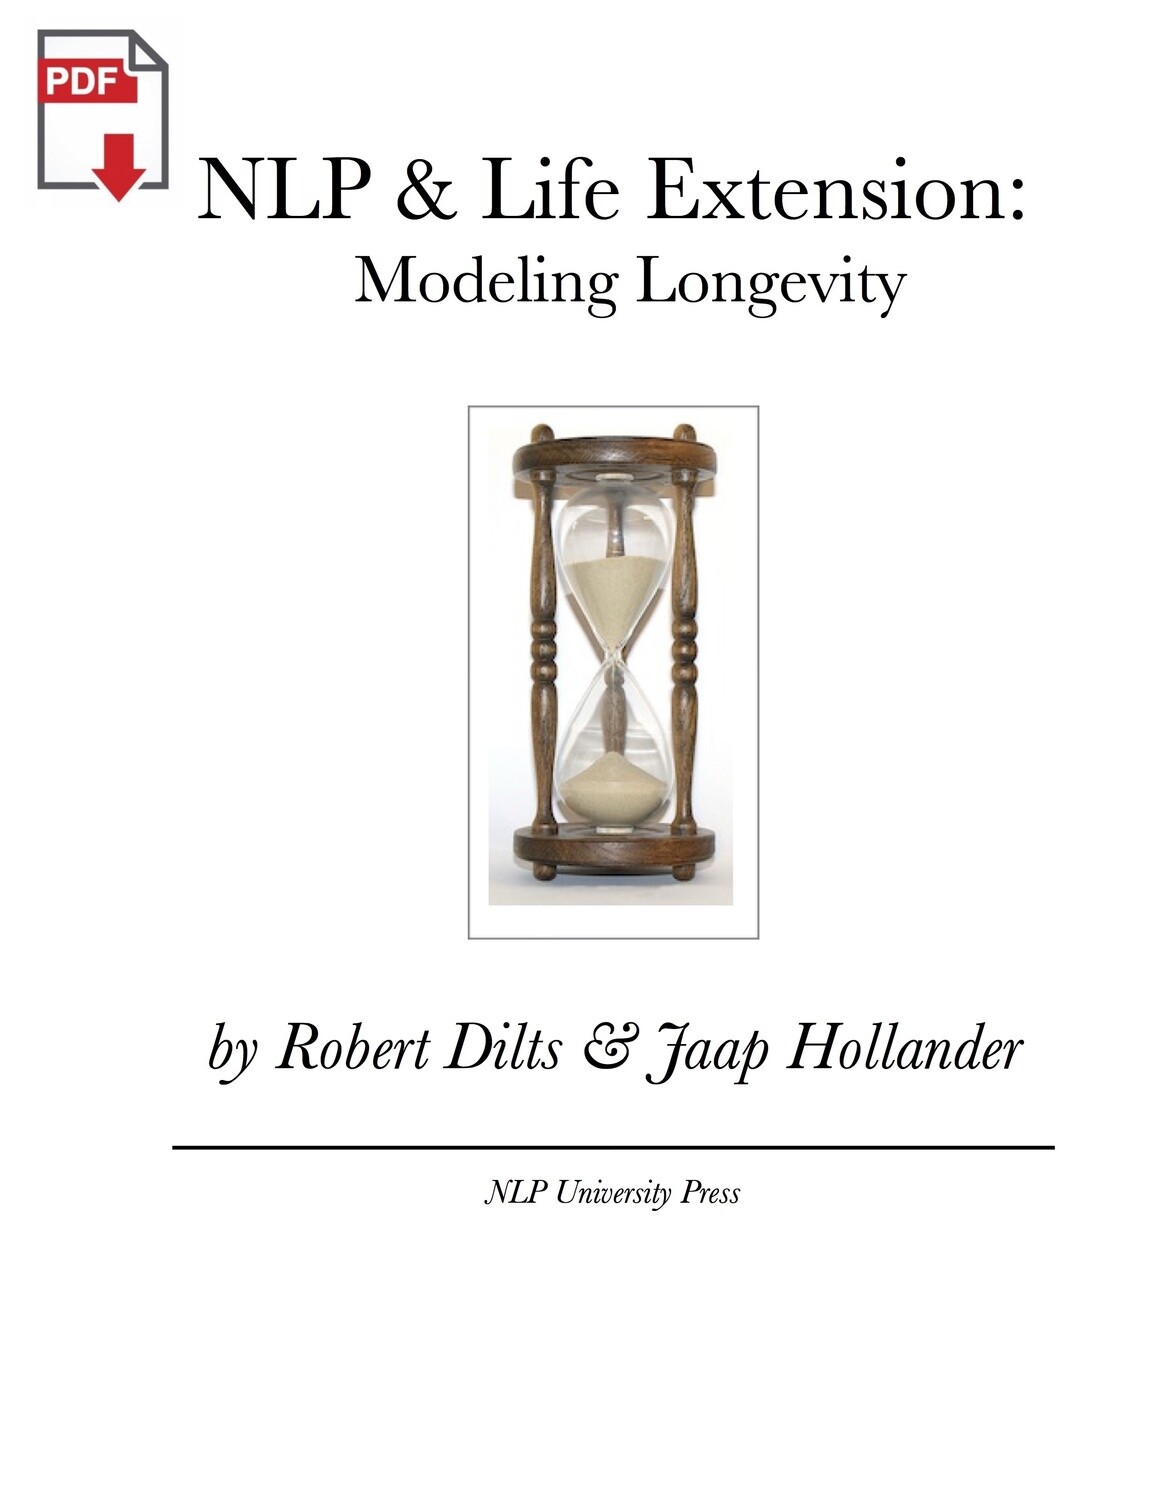 NLP & Life Extension: Modeling Longevity [PDF]